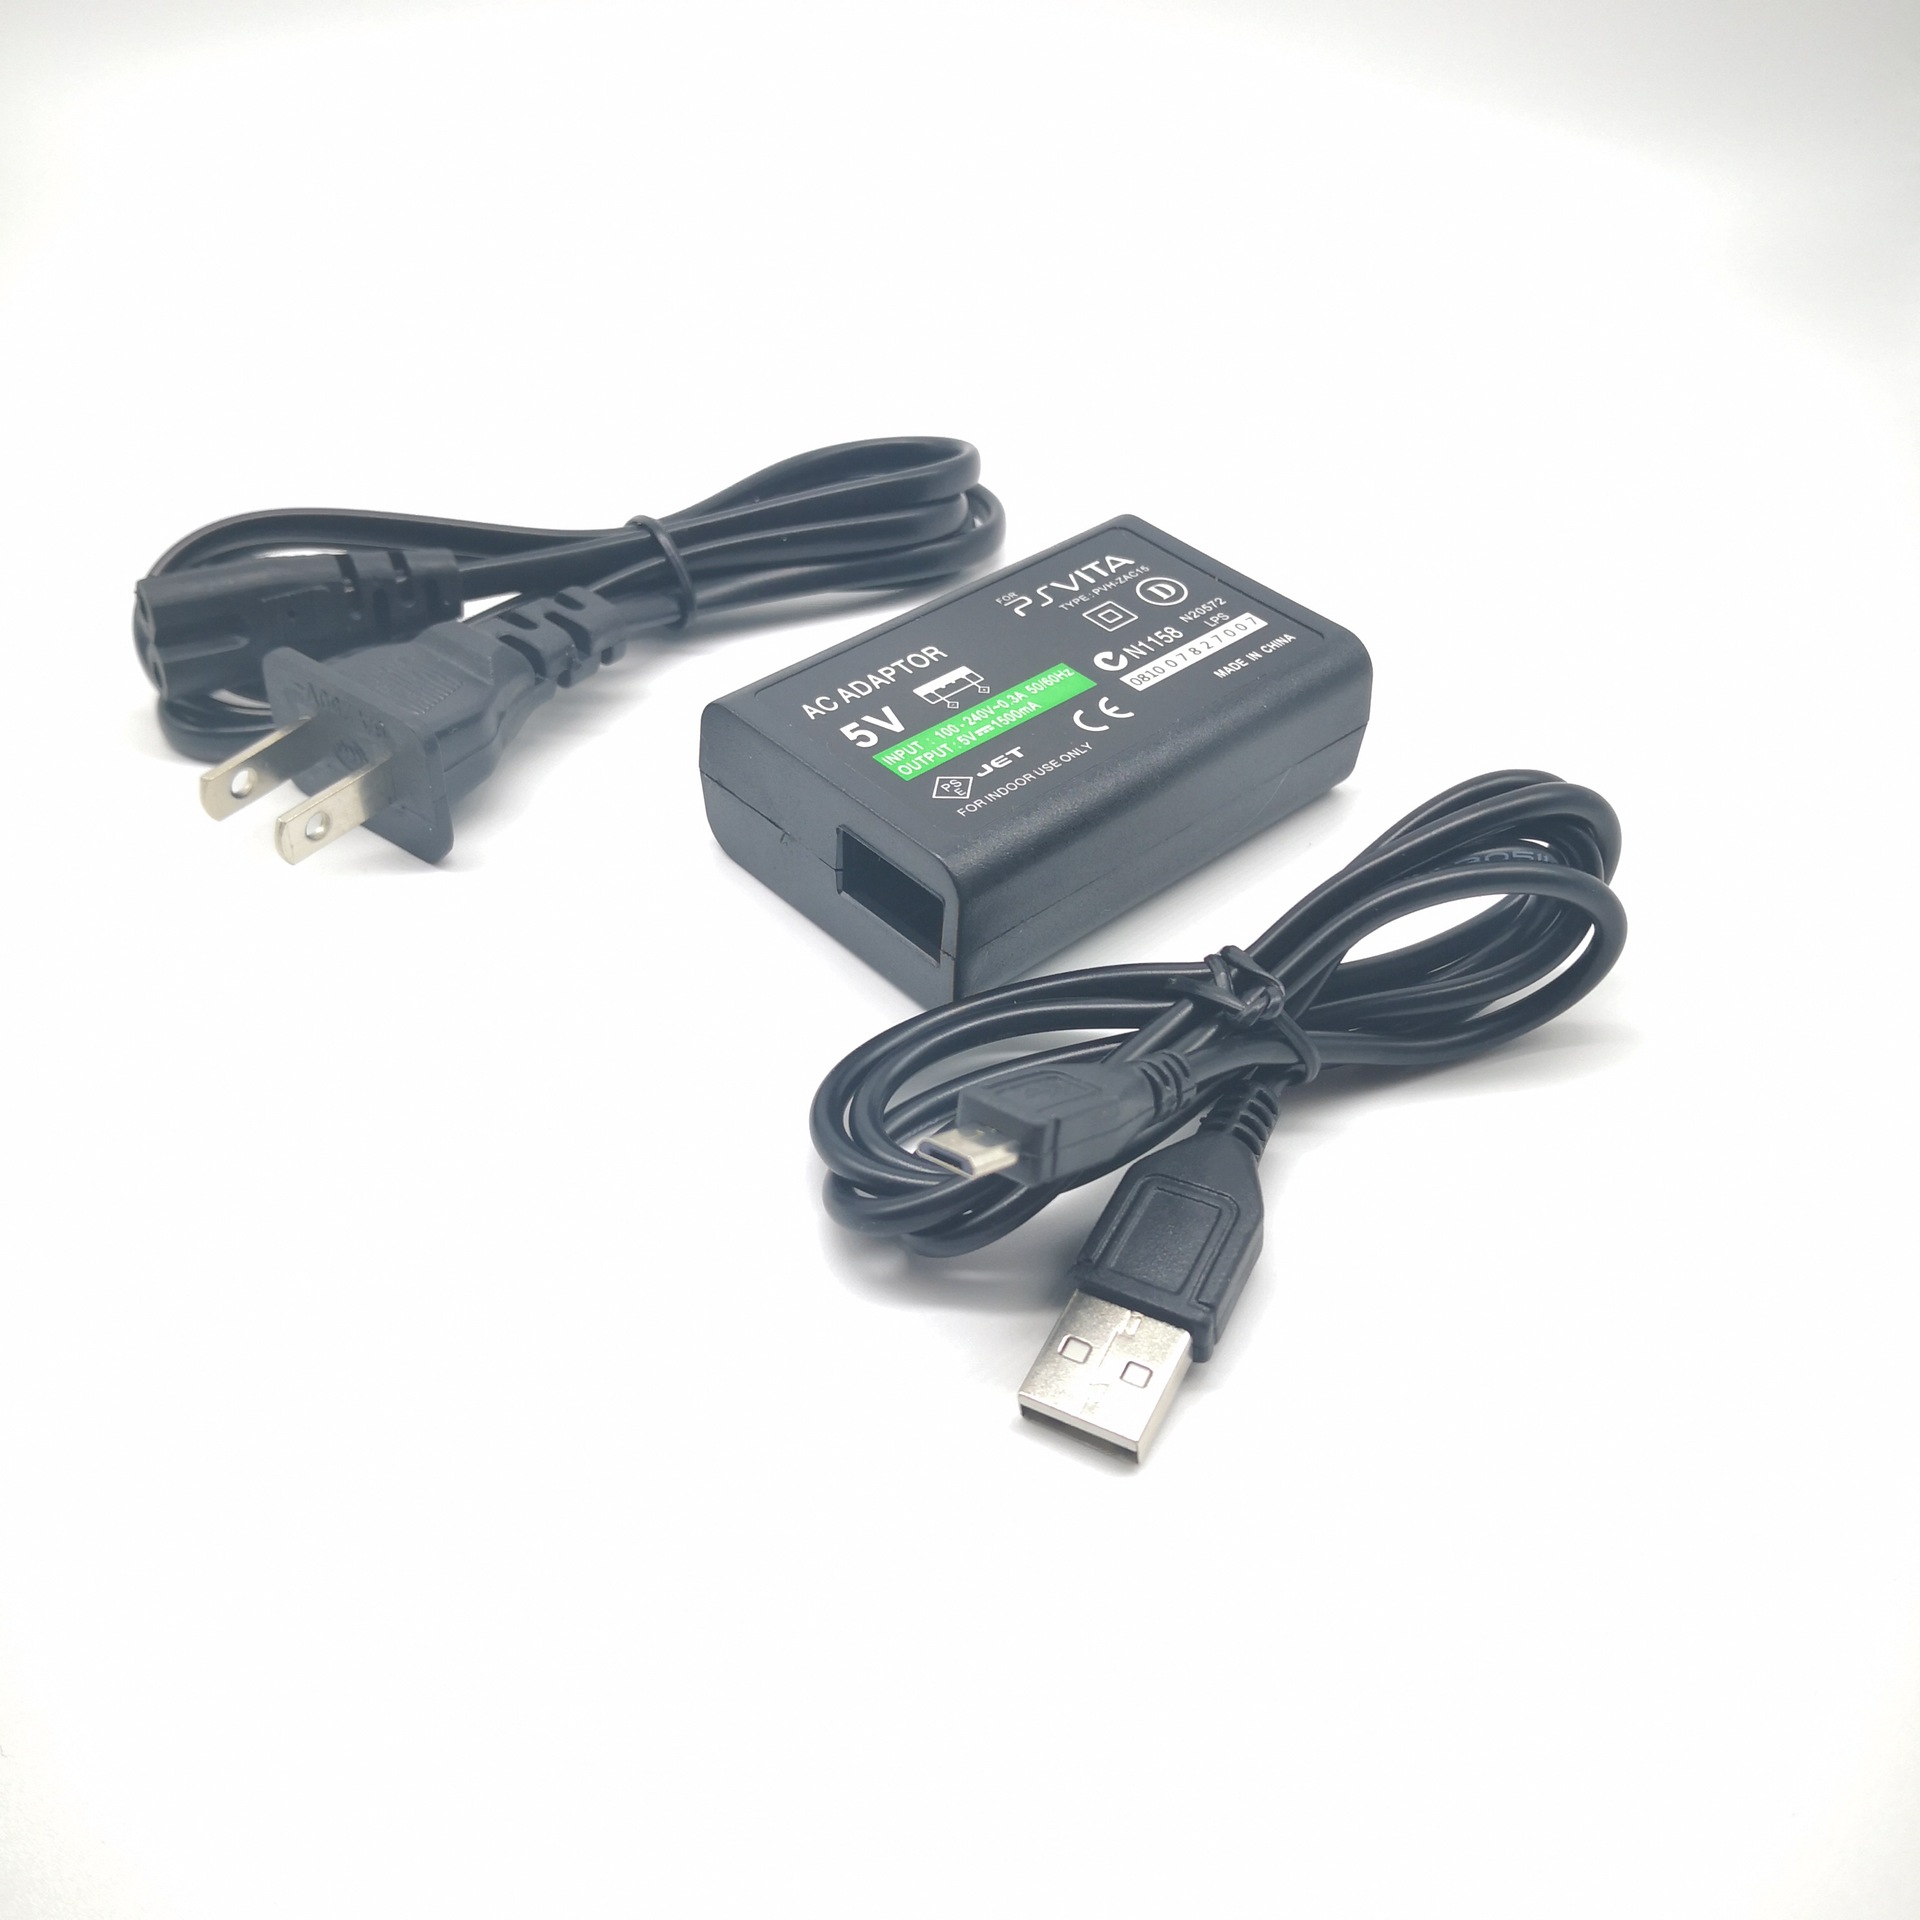 USB 데이터 충전 케이블 코드가있는 벽 충전기 전원 공급 장치 AC 어댑터 PSVITA PS VITA PSV 2000 EU 소매점 플러그